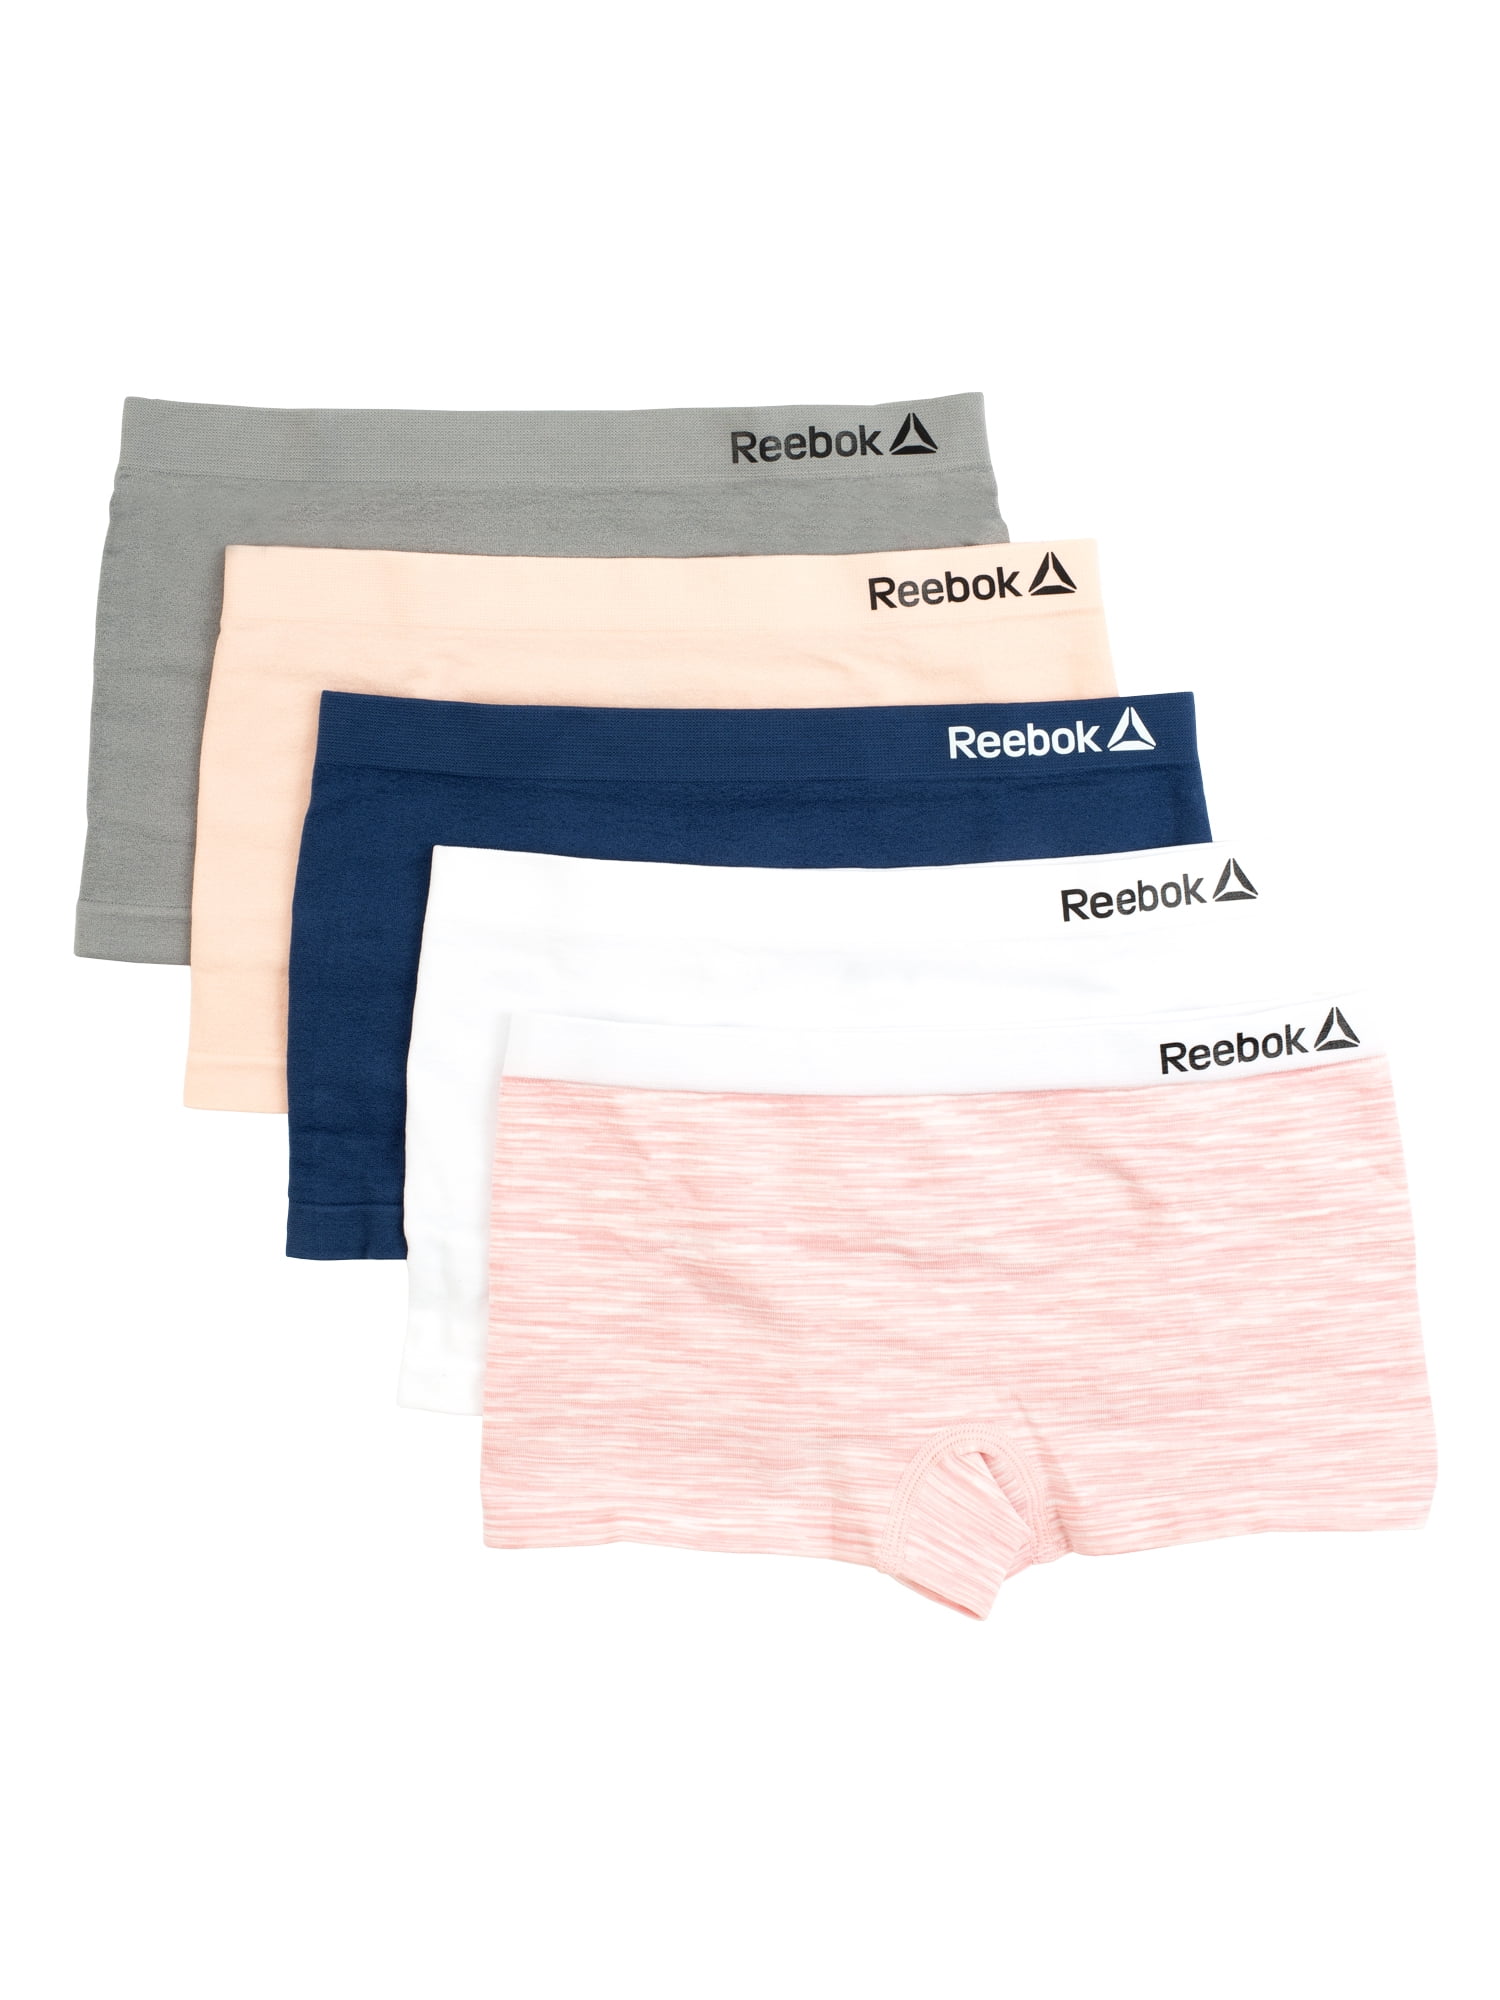 Reebok Girls Seamless Boyshort Panties Underwear, 5-Pack, Sizes S-XL